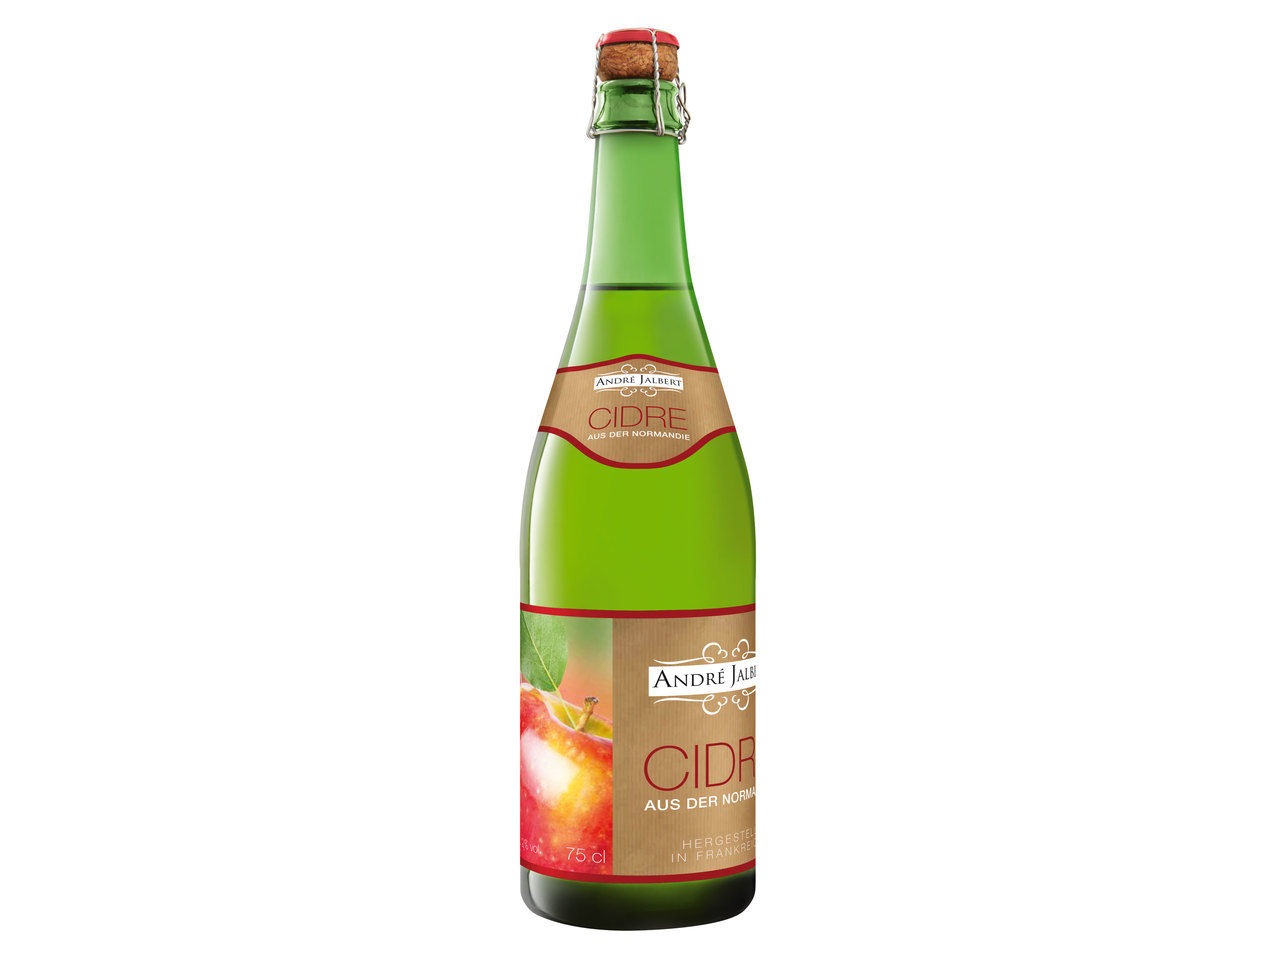 ANDRÉ JALBERT Cidre mild